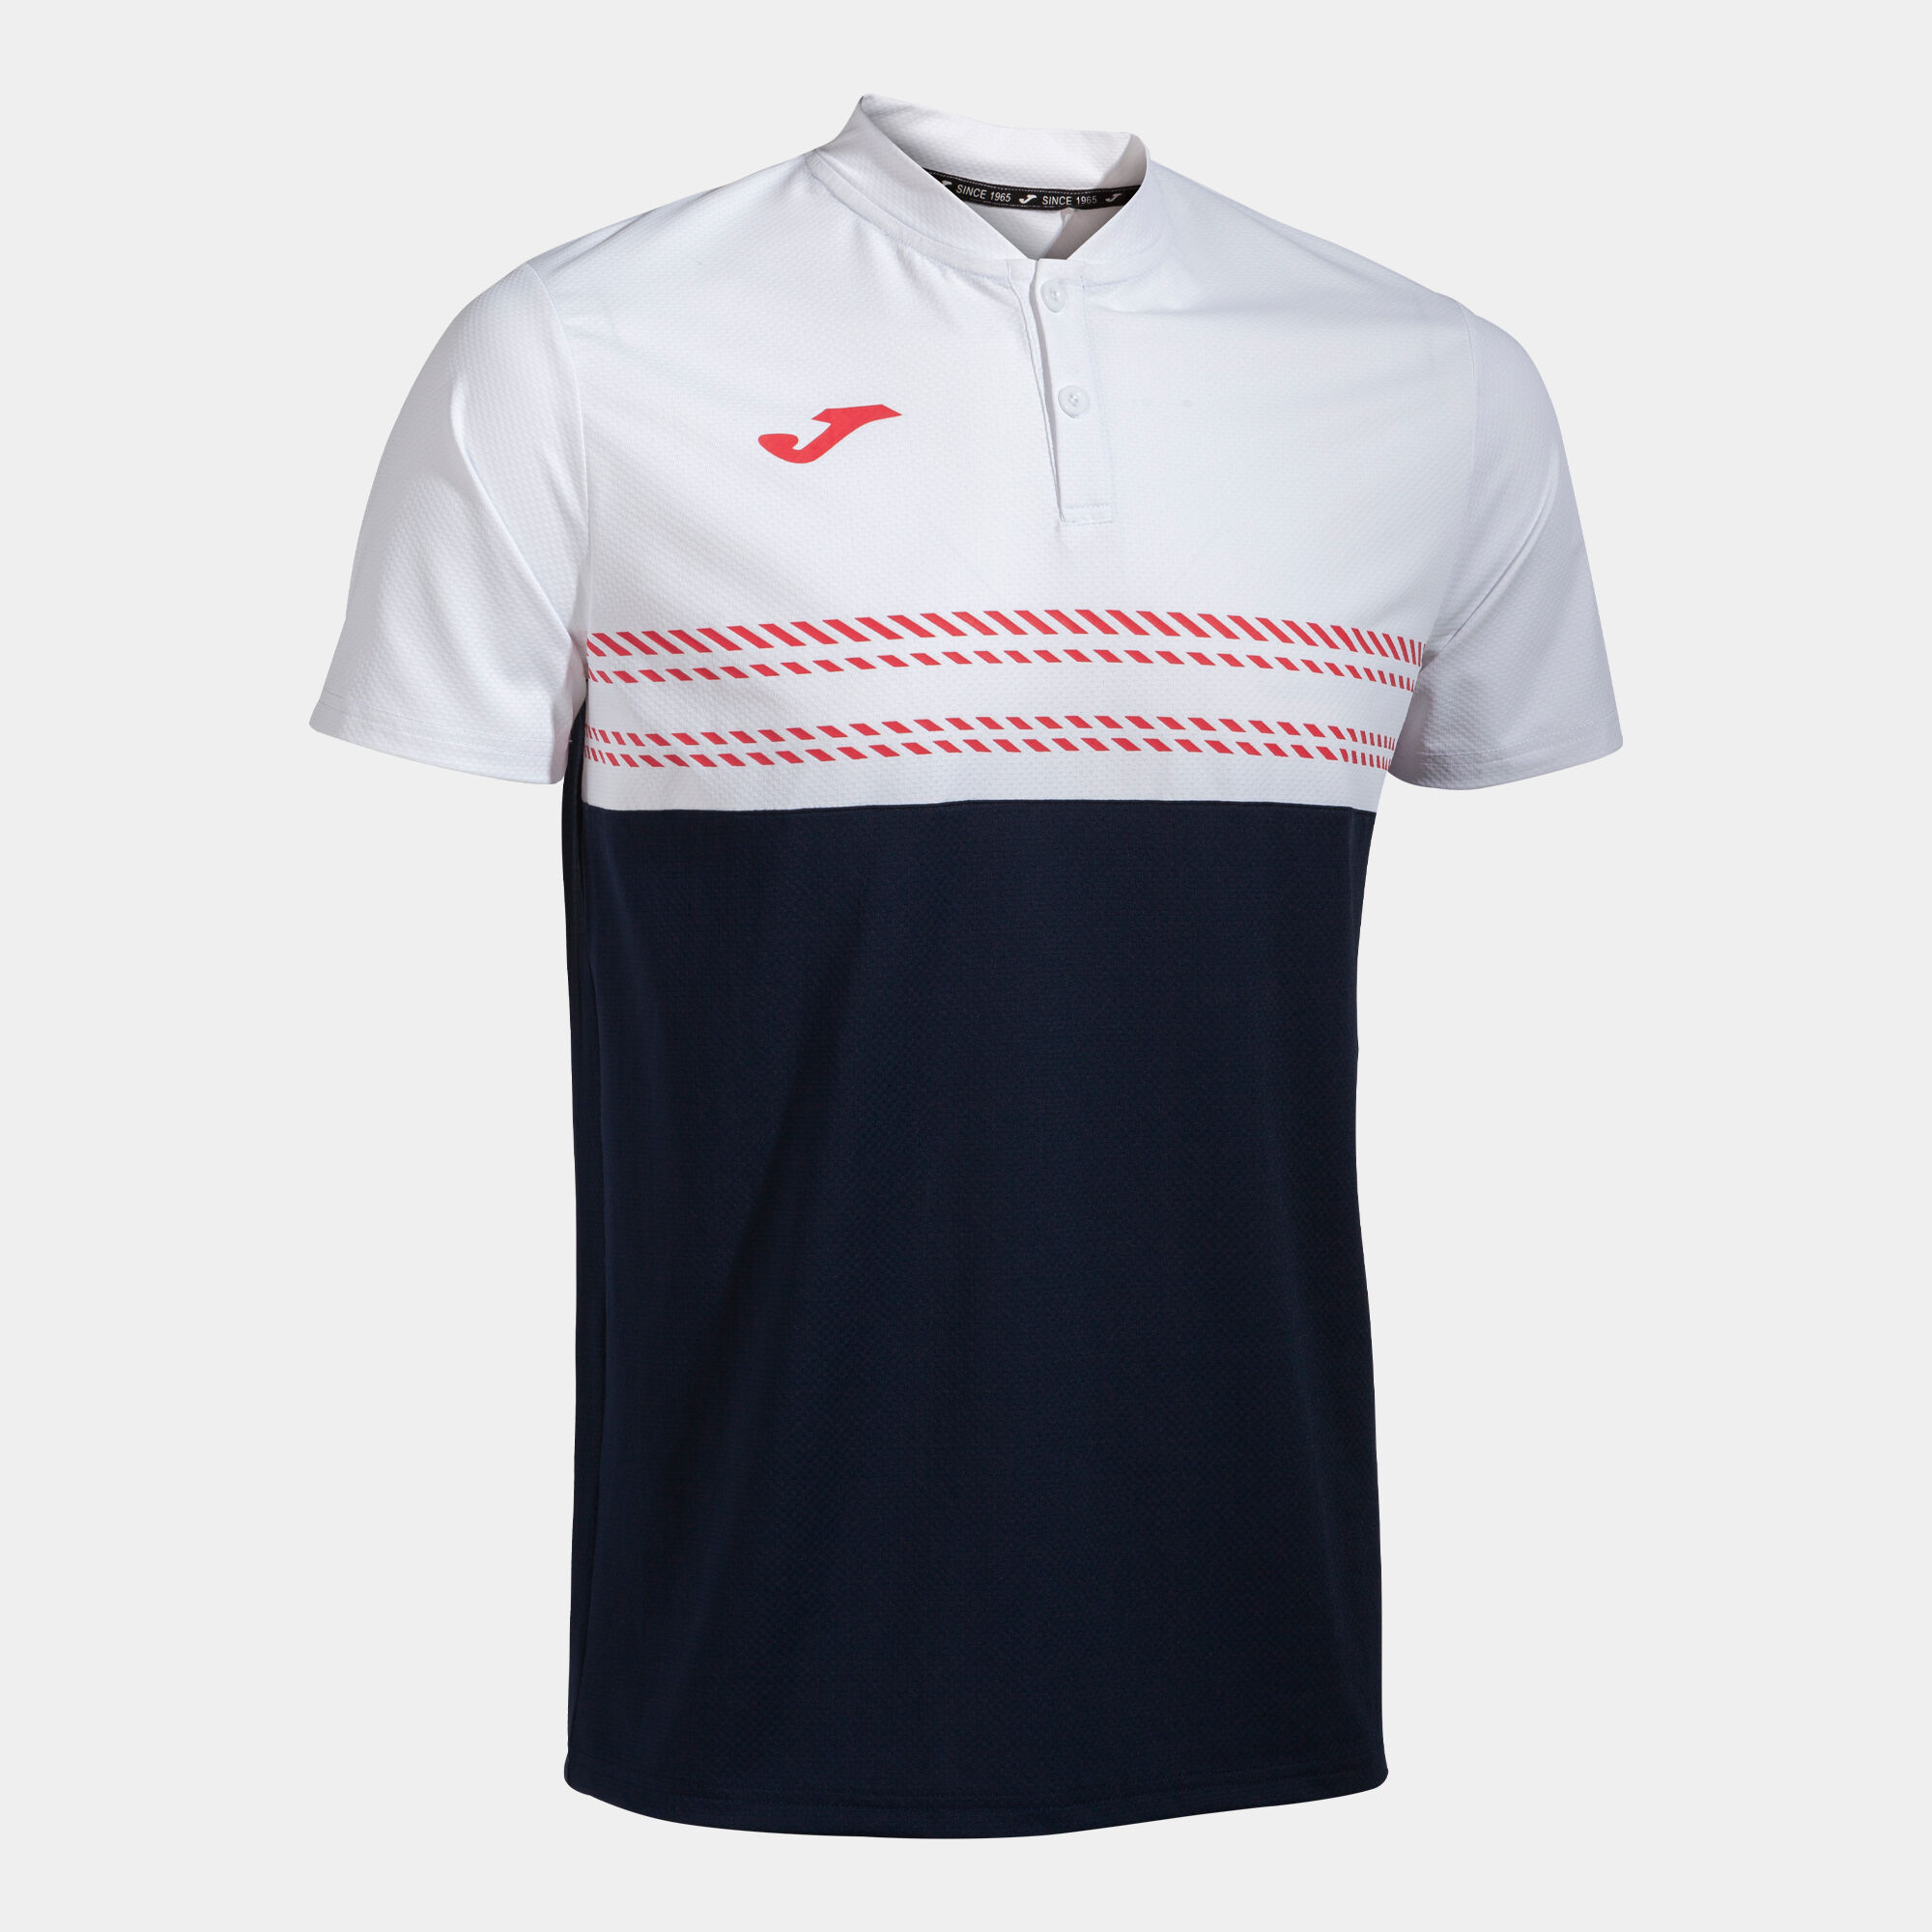 Polo shirt short-sleeve man Smash navy blue white red